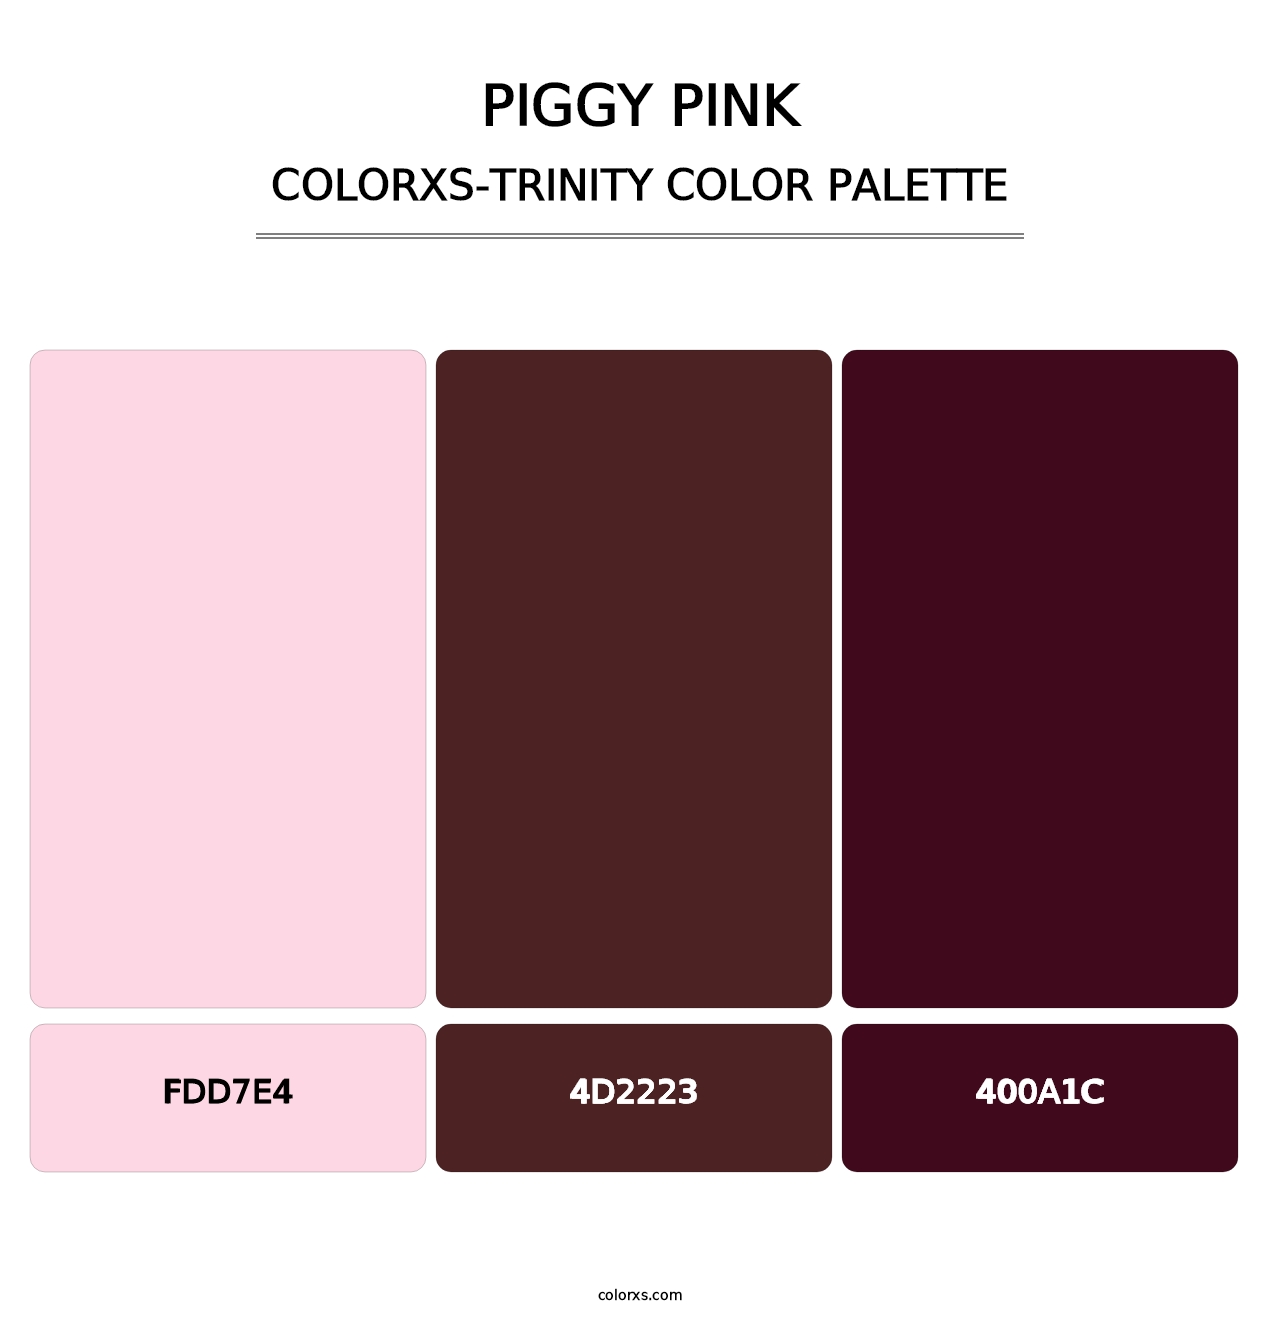 Piggy Pink - Colorxs Trinity Palette